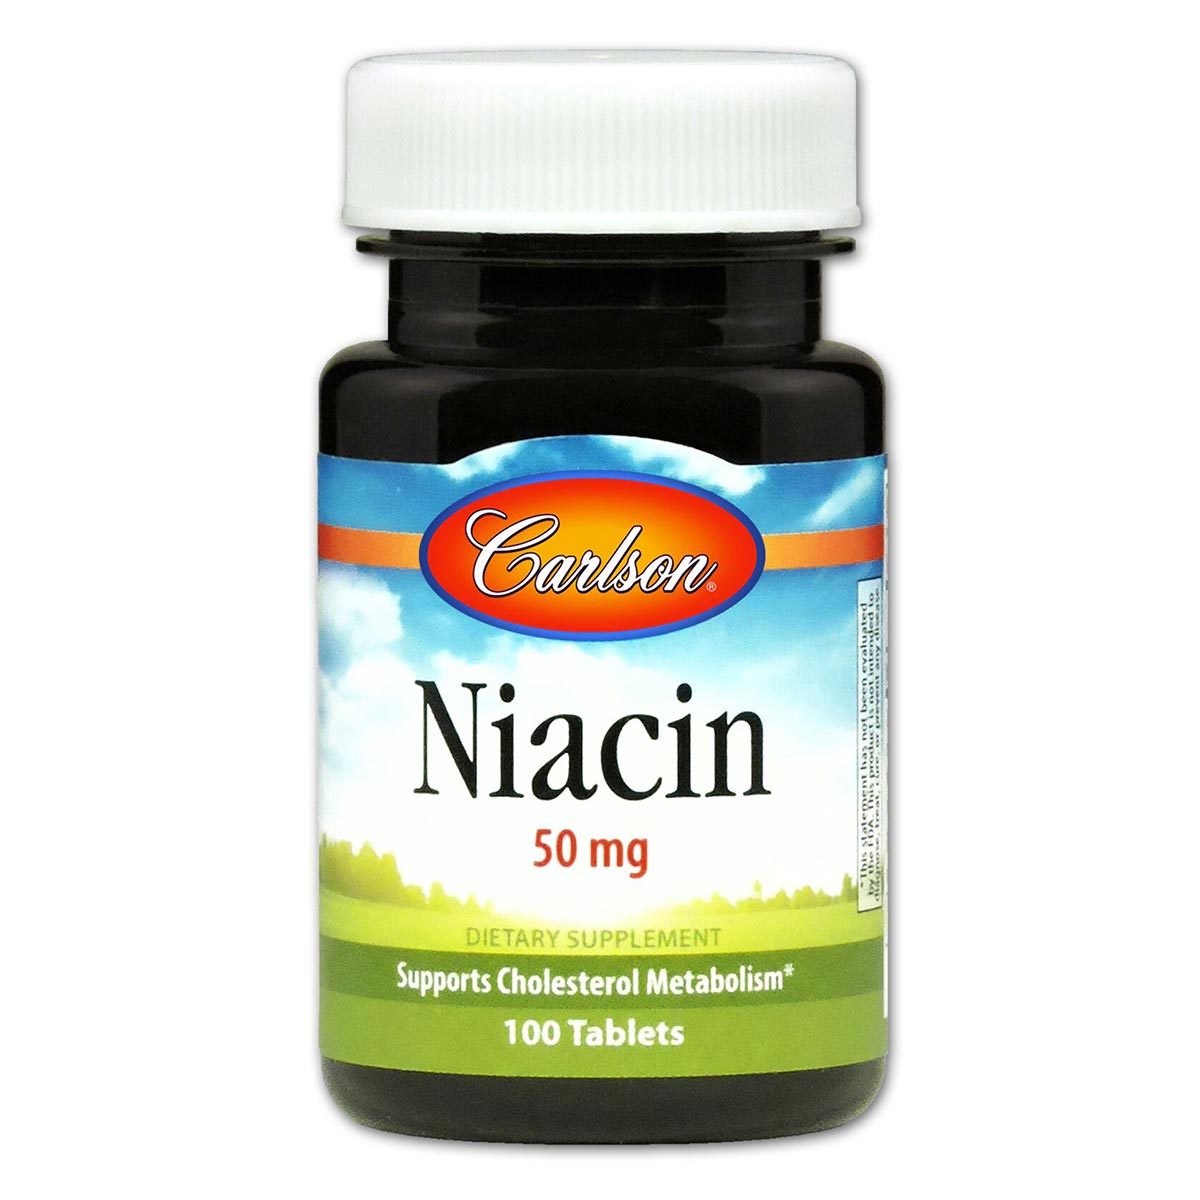 Primary image of Niacin 50mg